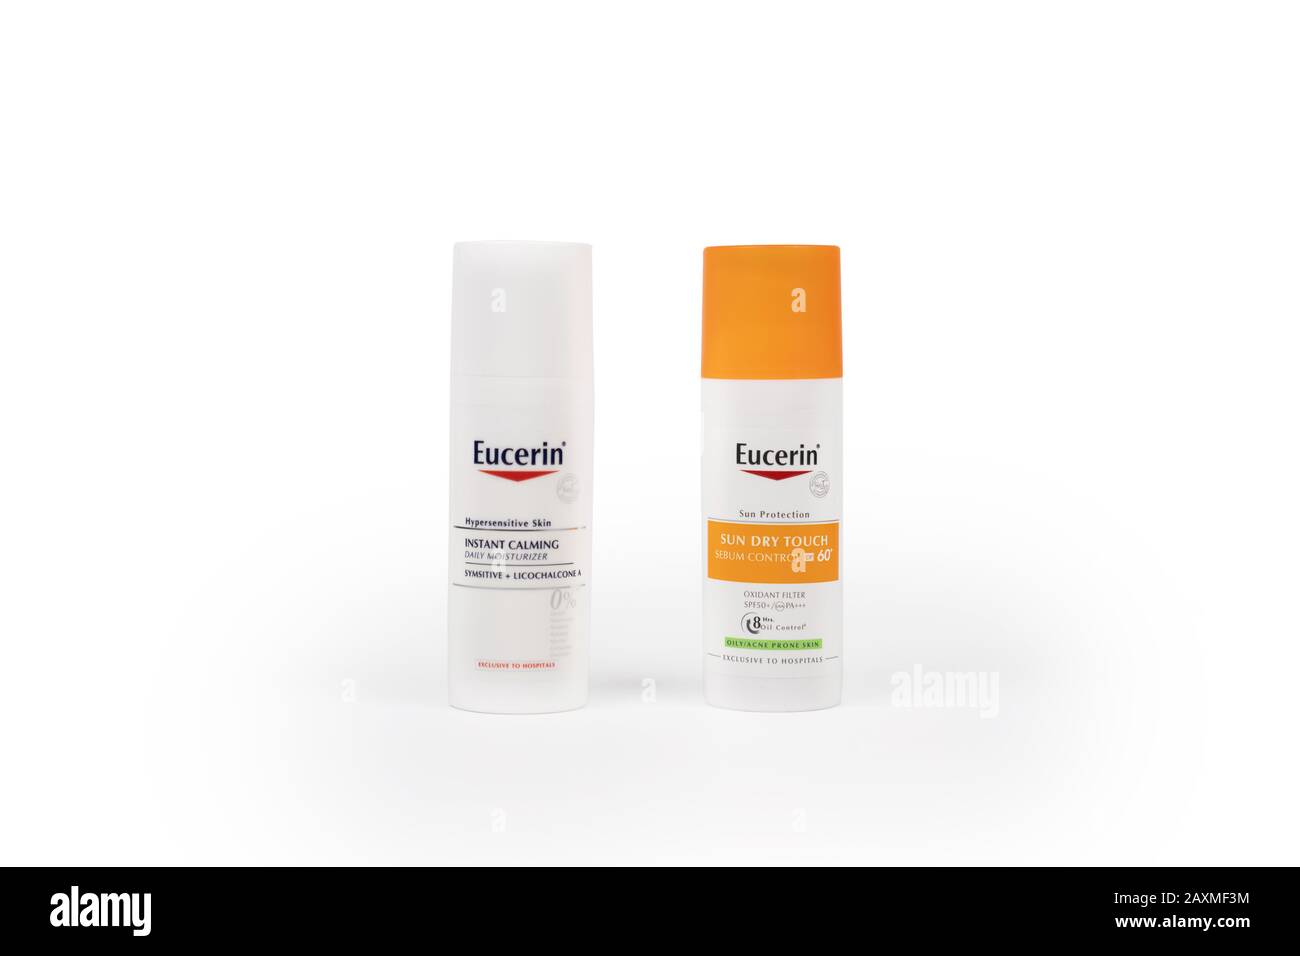 Bangkok, Thailand - 18 Aug, 2019: Eucerin daily moisturizer for hypersensitive skin and sun protection product sebum control SPF 60 oxidant filter on Stock Photo